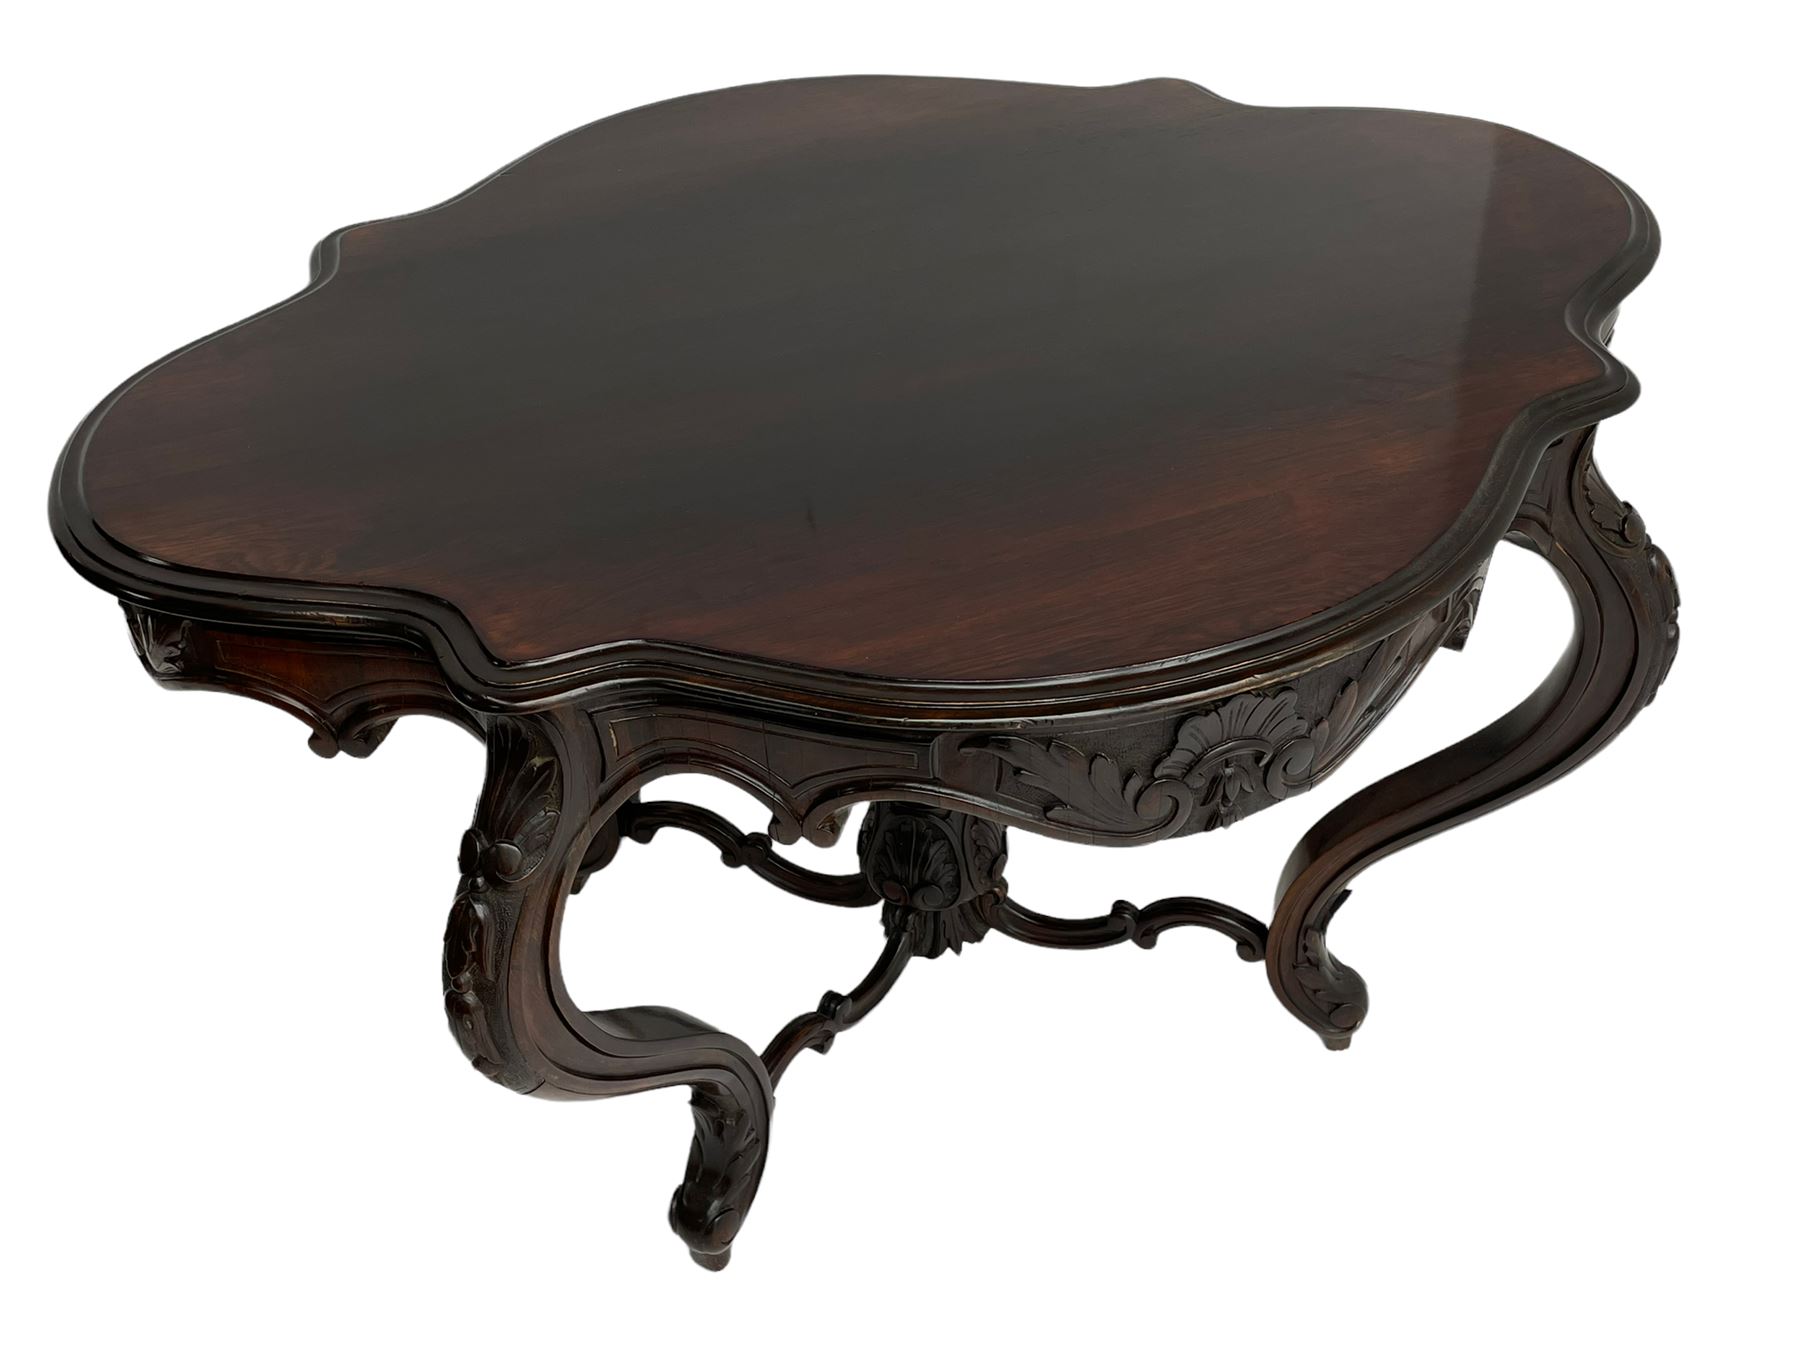 19th century Irish rosewood centre table - Image 4 of 12